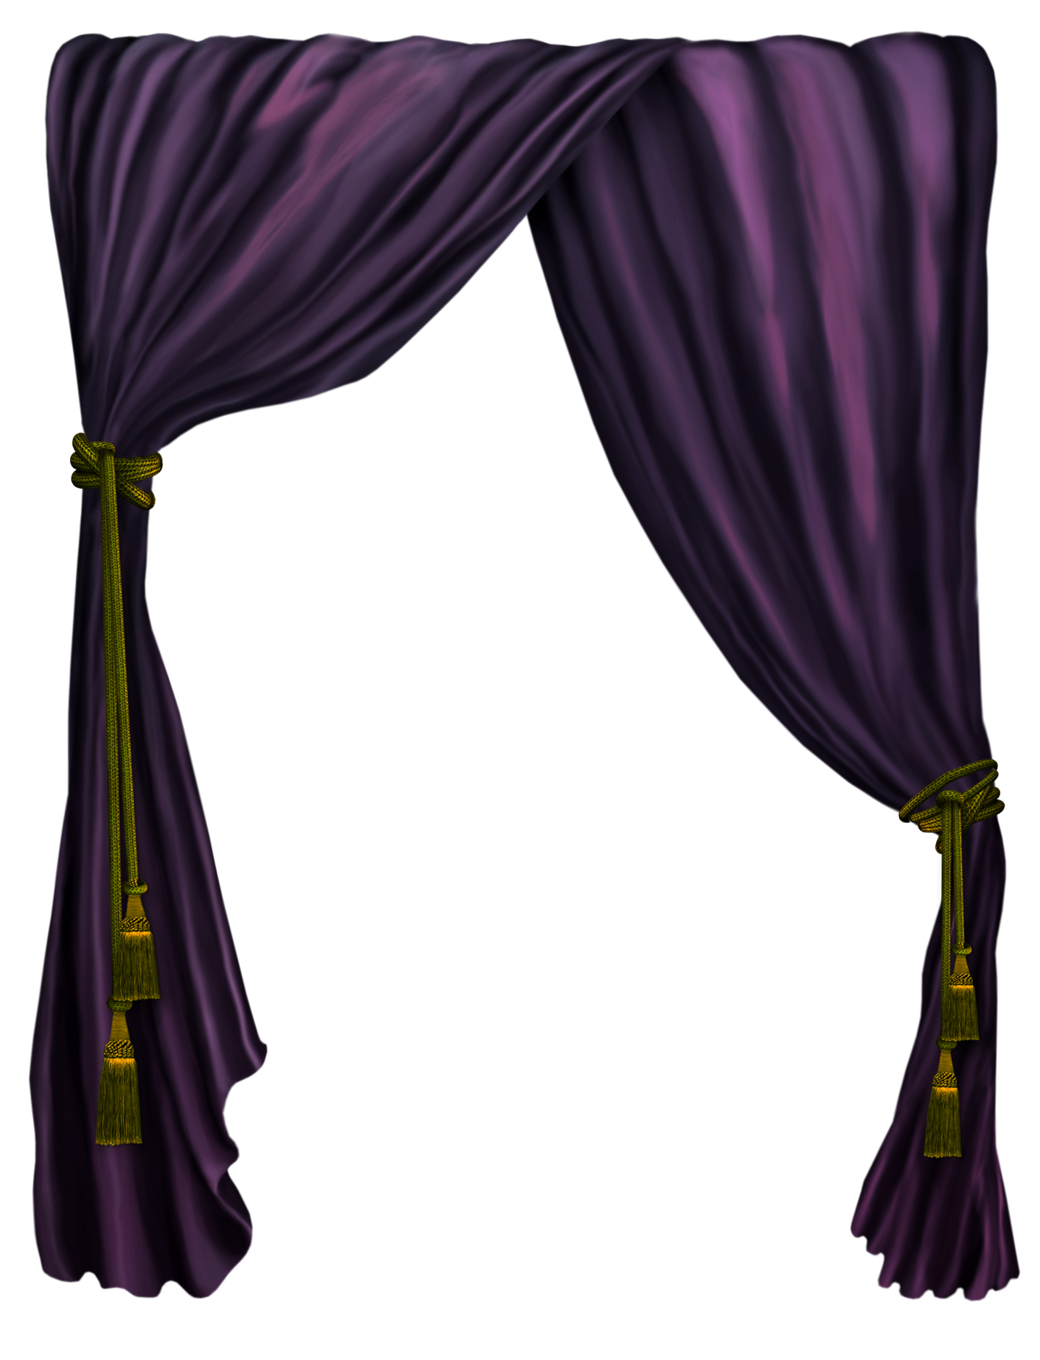 Curtains clipart cartoon. Purple curtain decor png